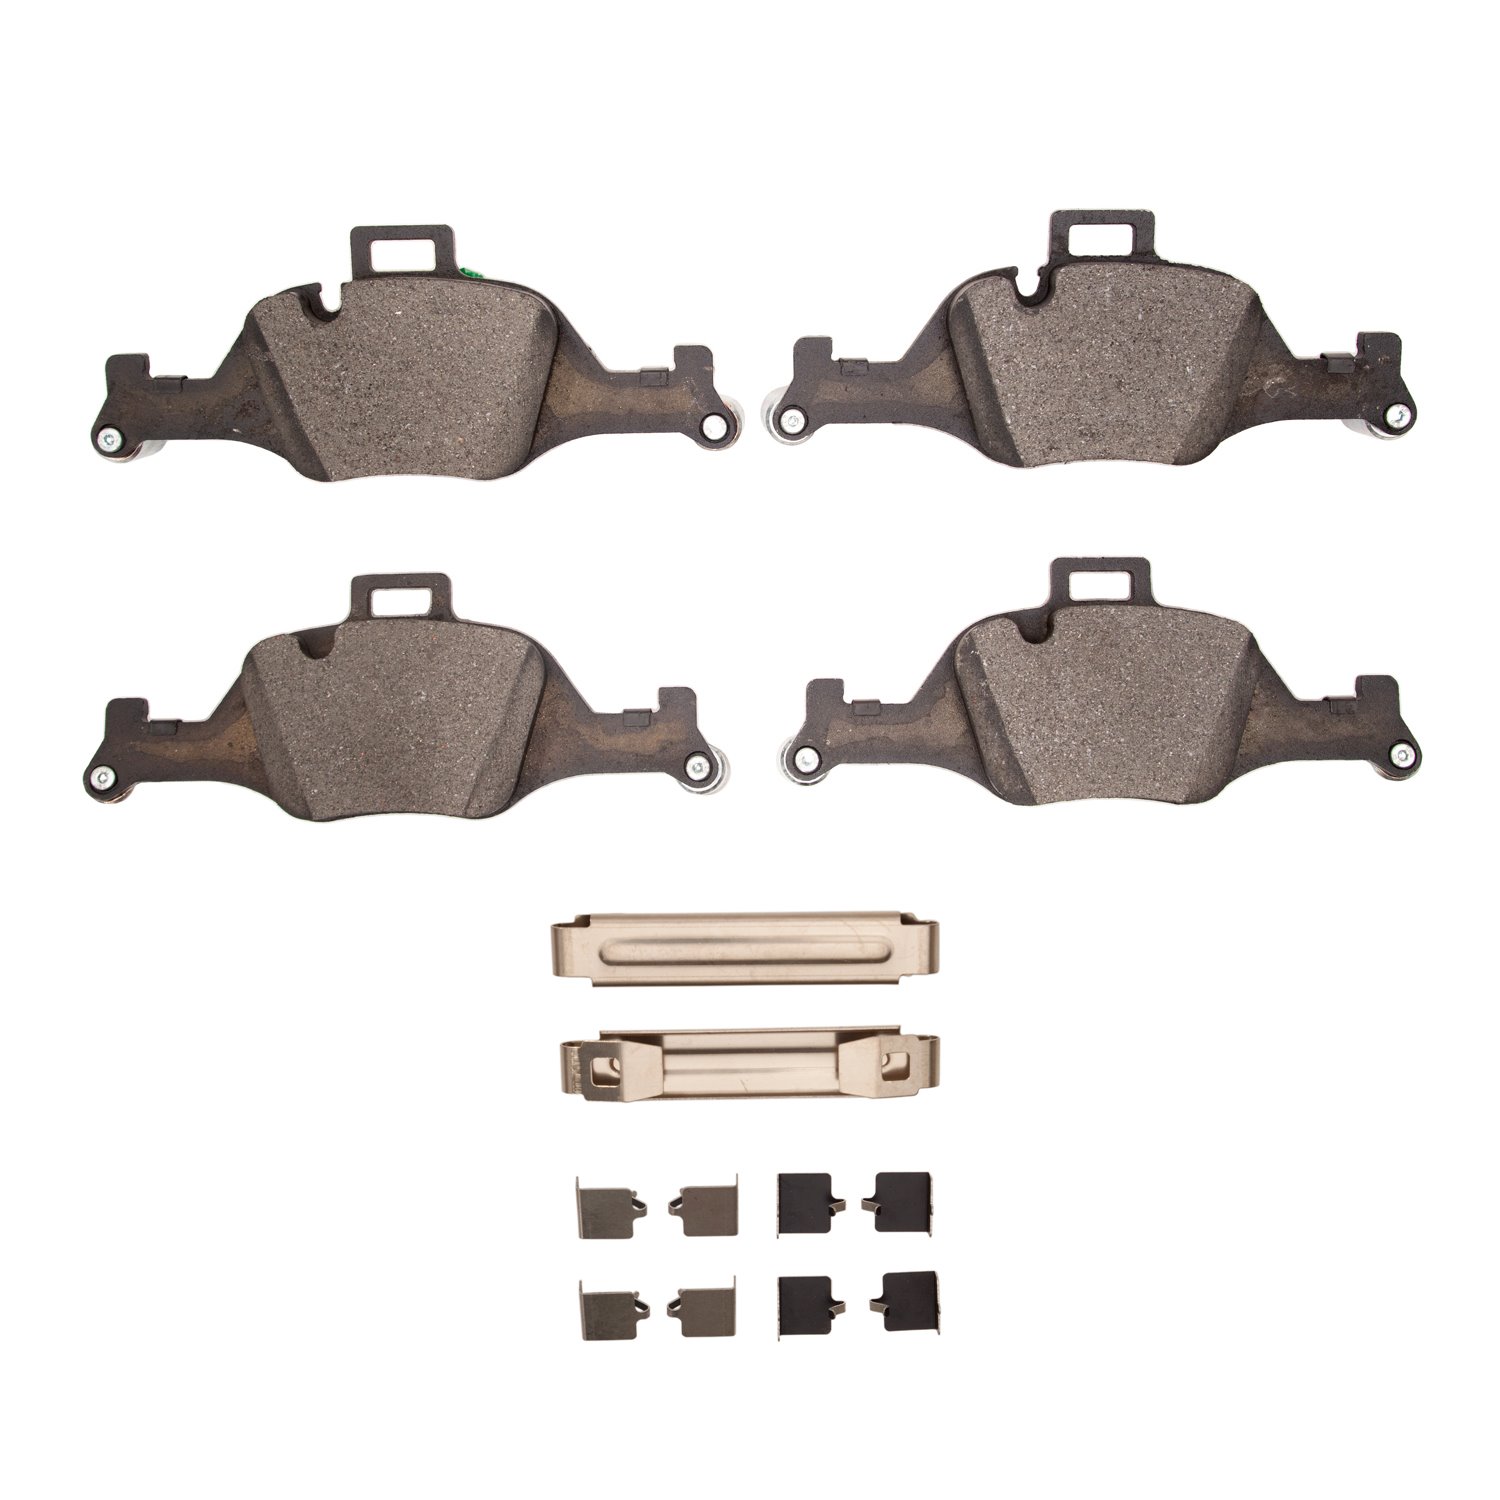 Ceramic Brake Pads & Hardware Kit, Fits Select BMW, Position: Front